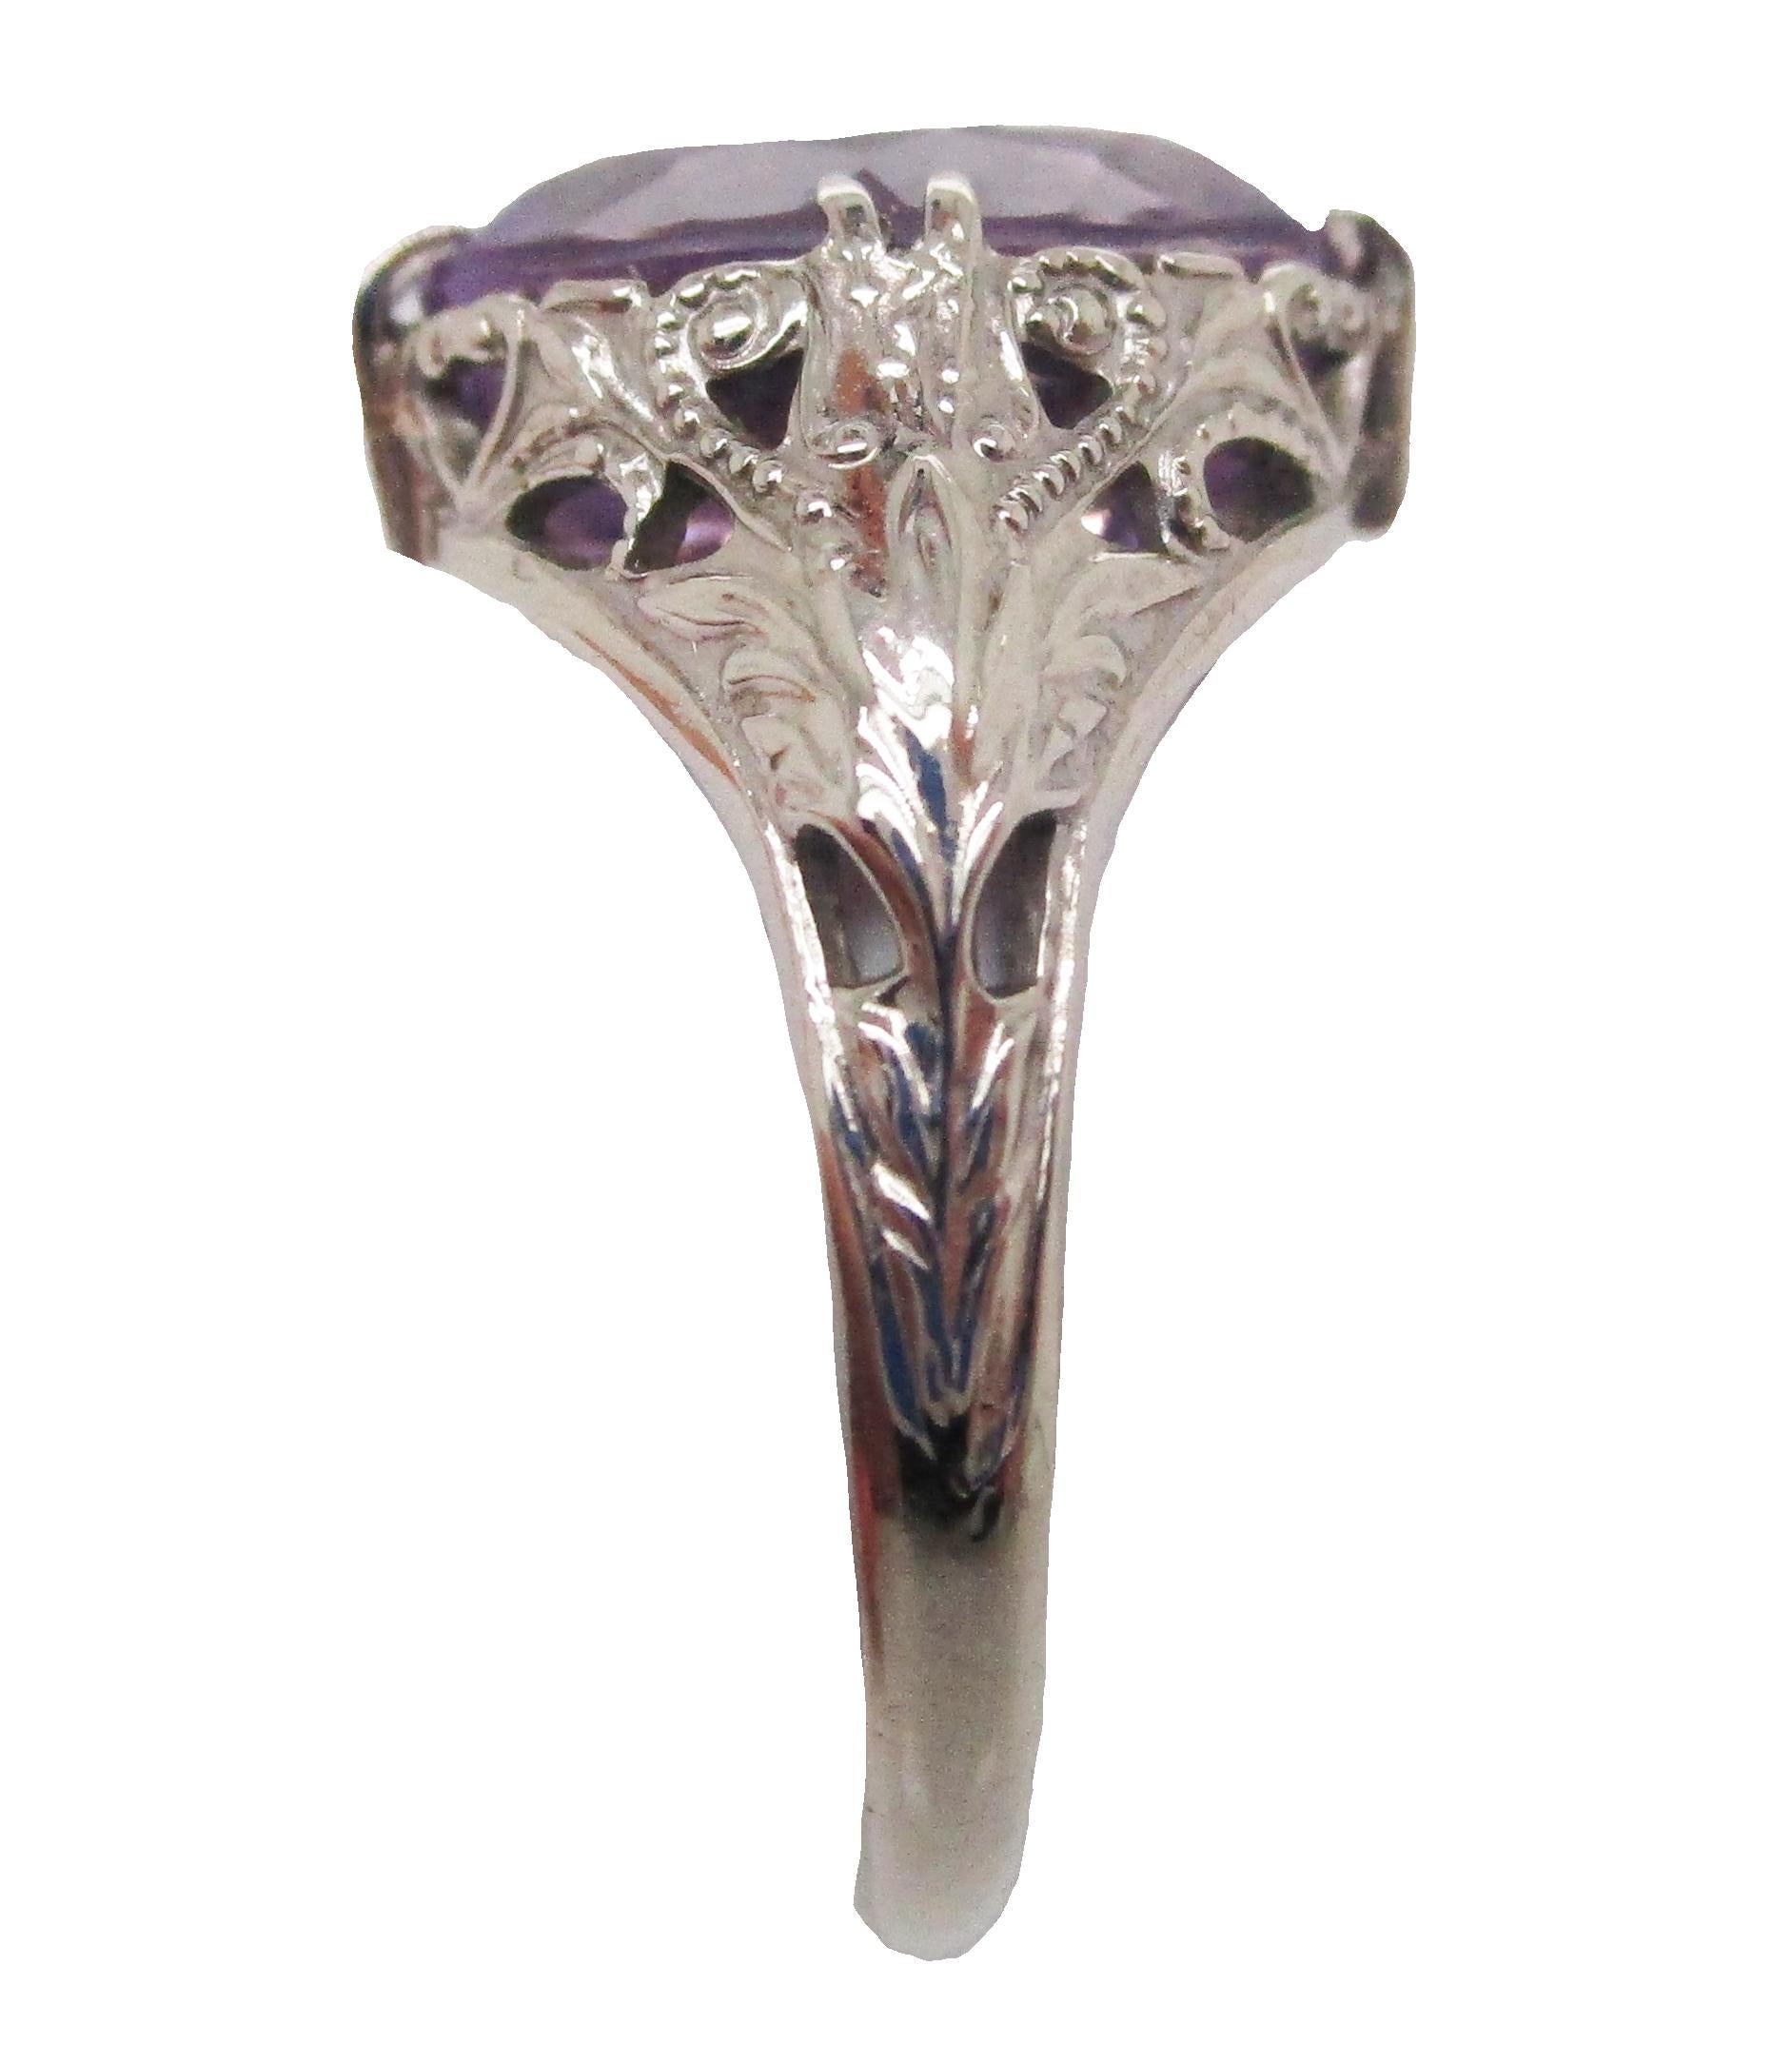 14 Karat White Gold Filigree Rose de France Amethyst Ring with Gold Flower Inlay 2